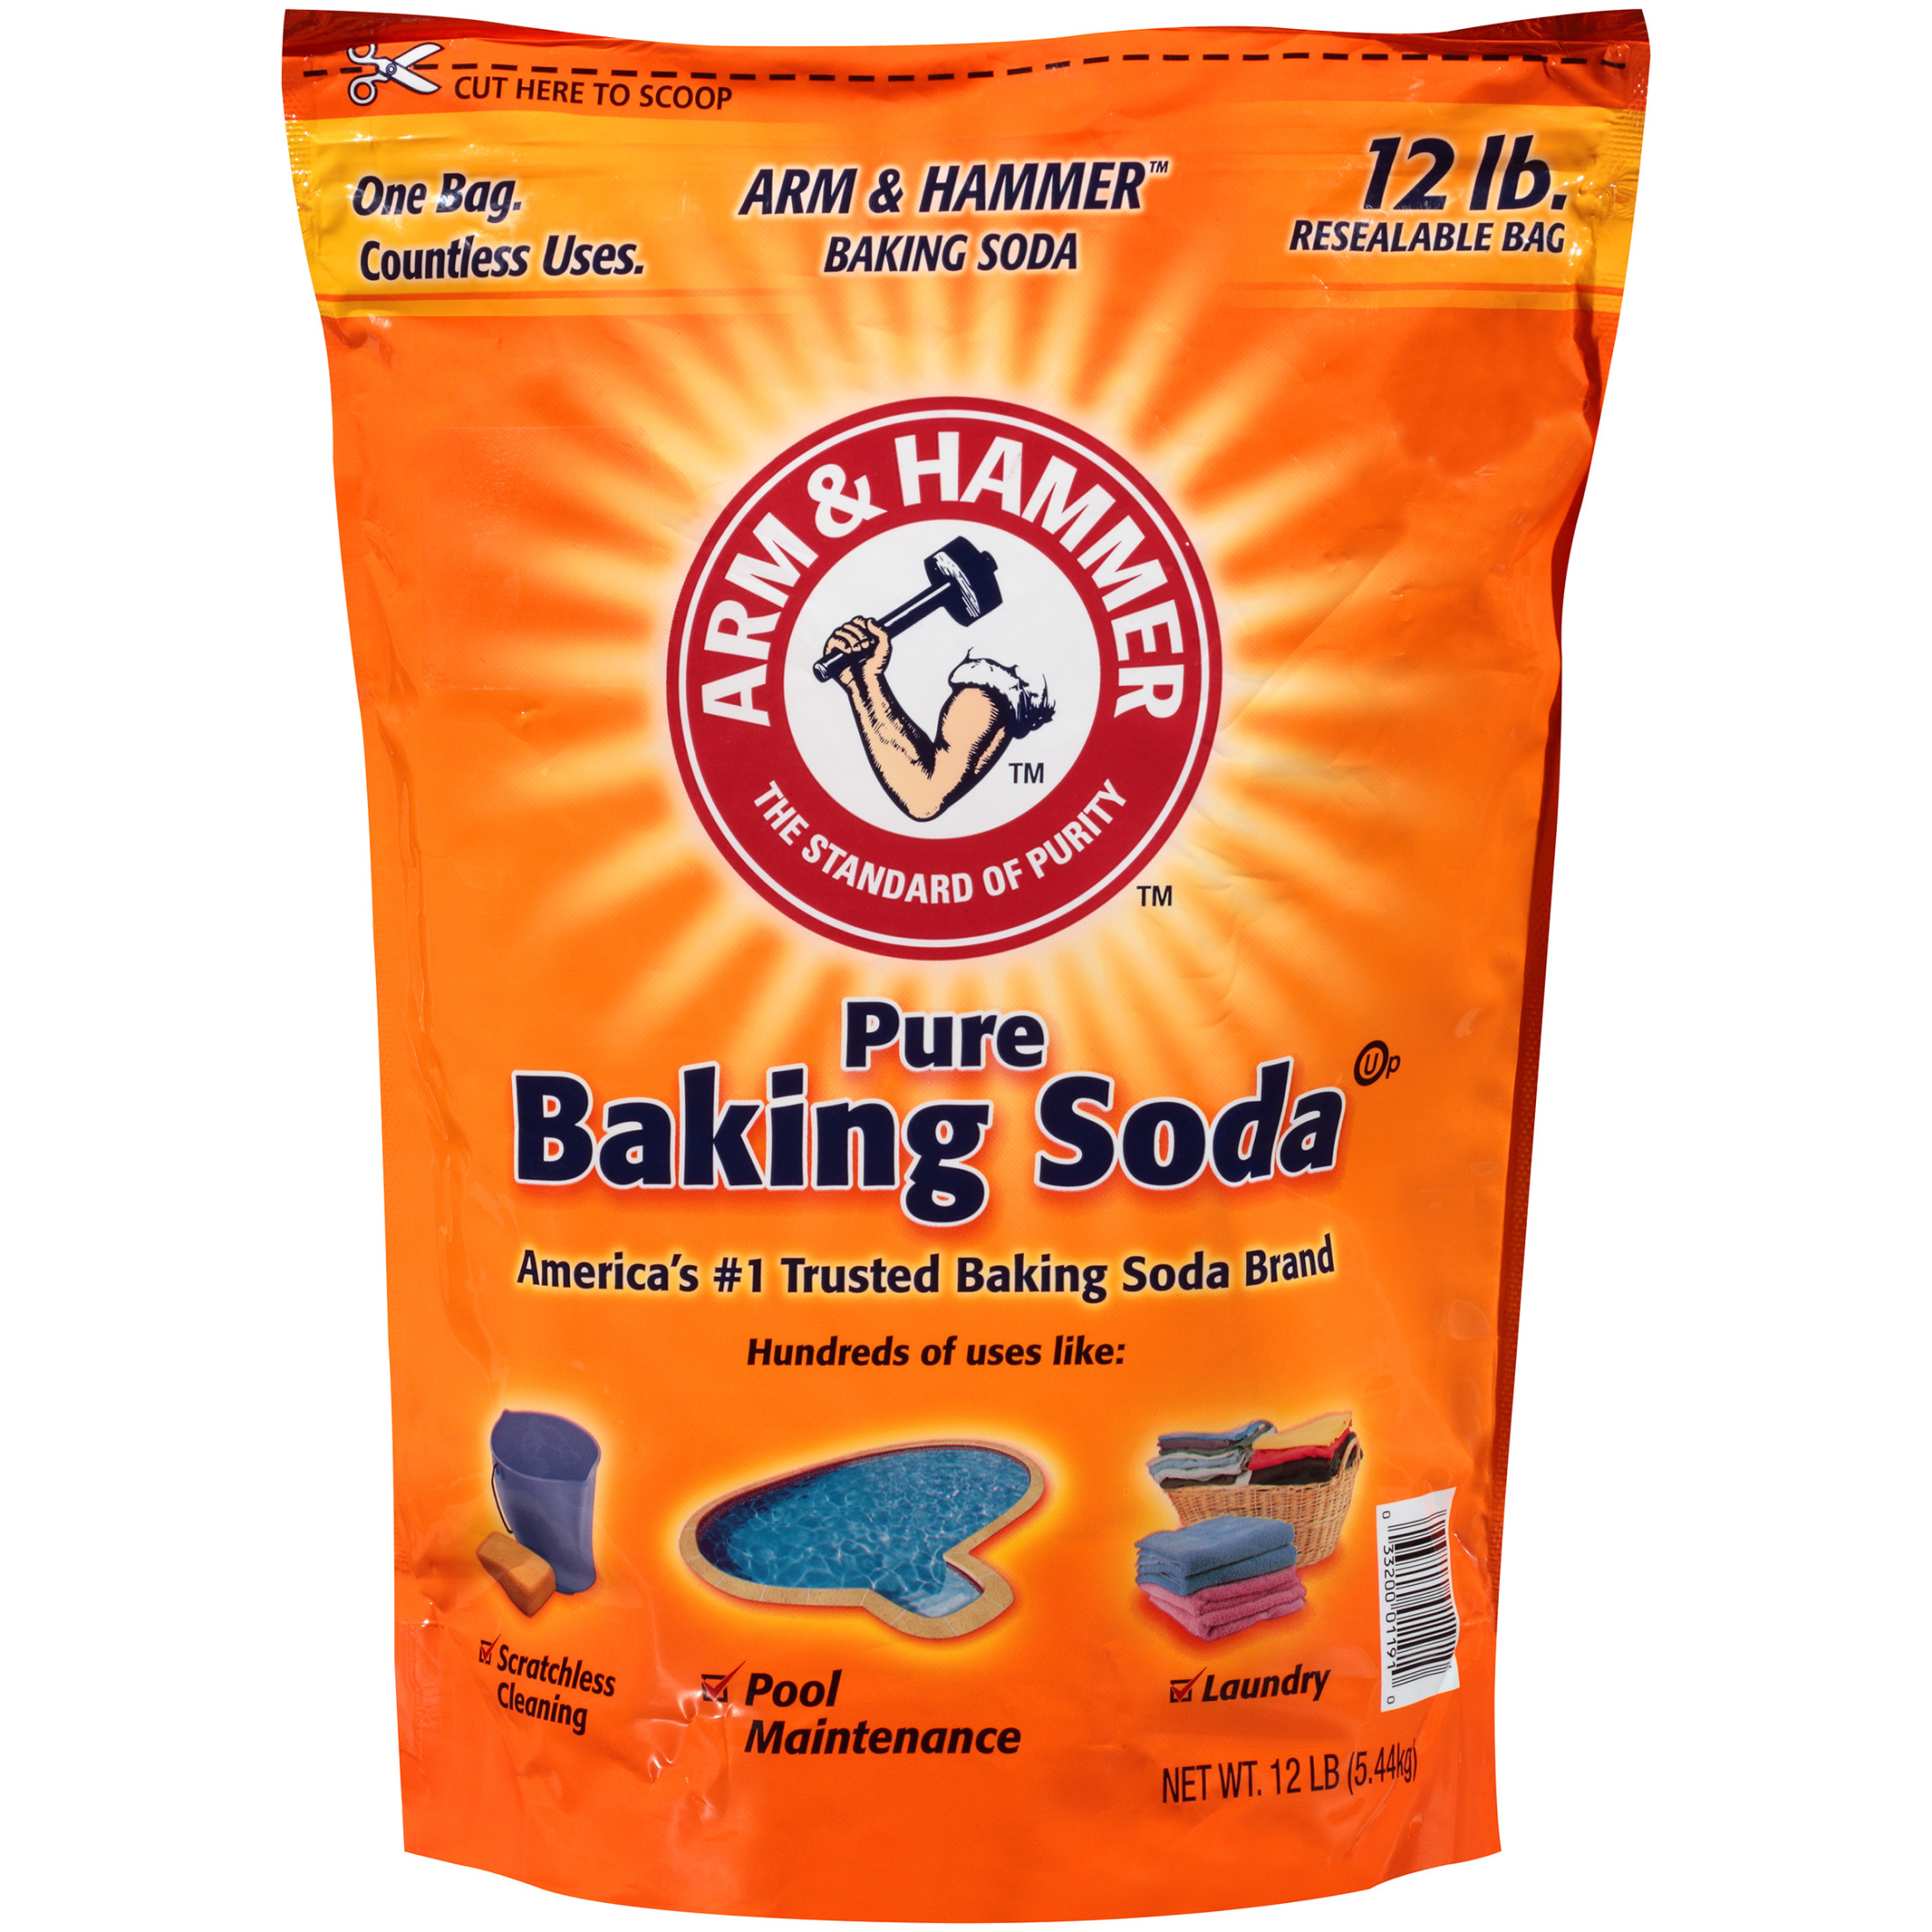 Arm & Hammer Pure Baking Soda, 12 lb., Reseable Bag - image 1 of 16